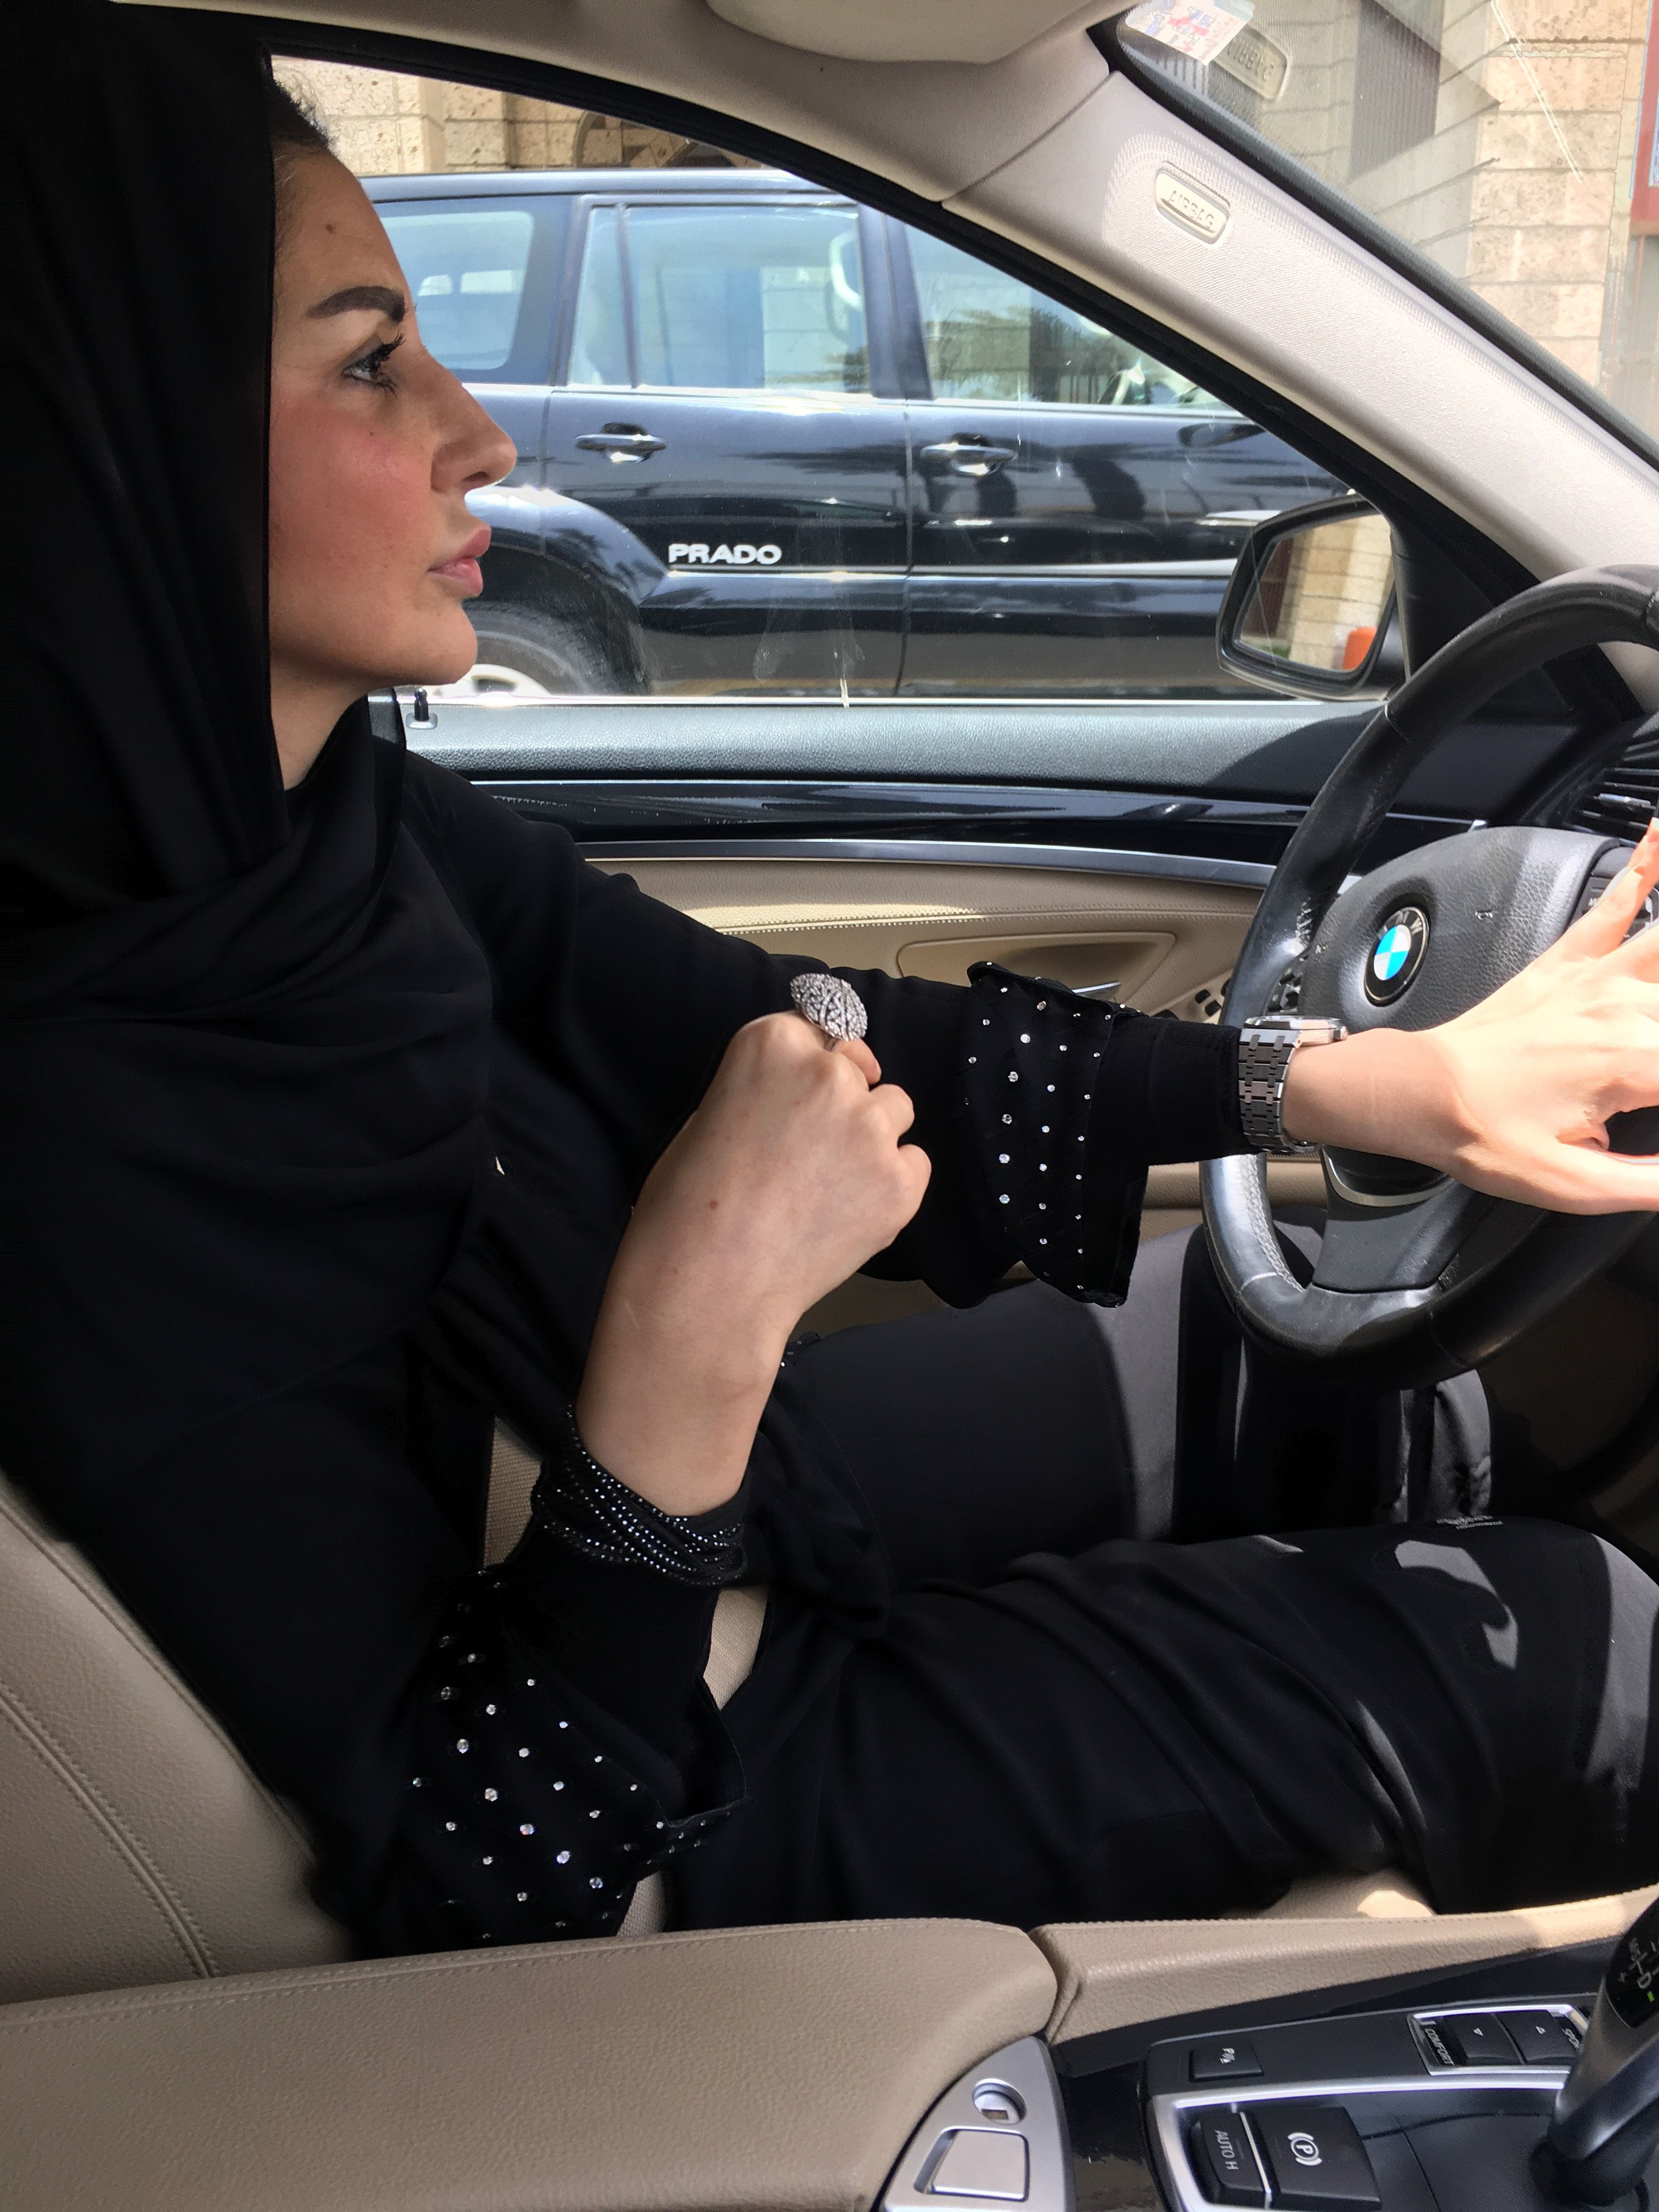 Finally, Women in Saudi Arabia Are Allowed to Drive